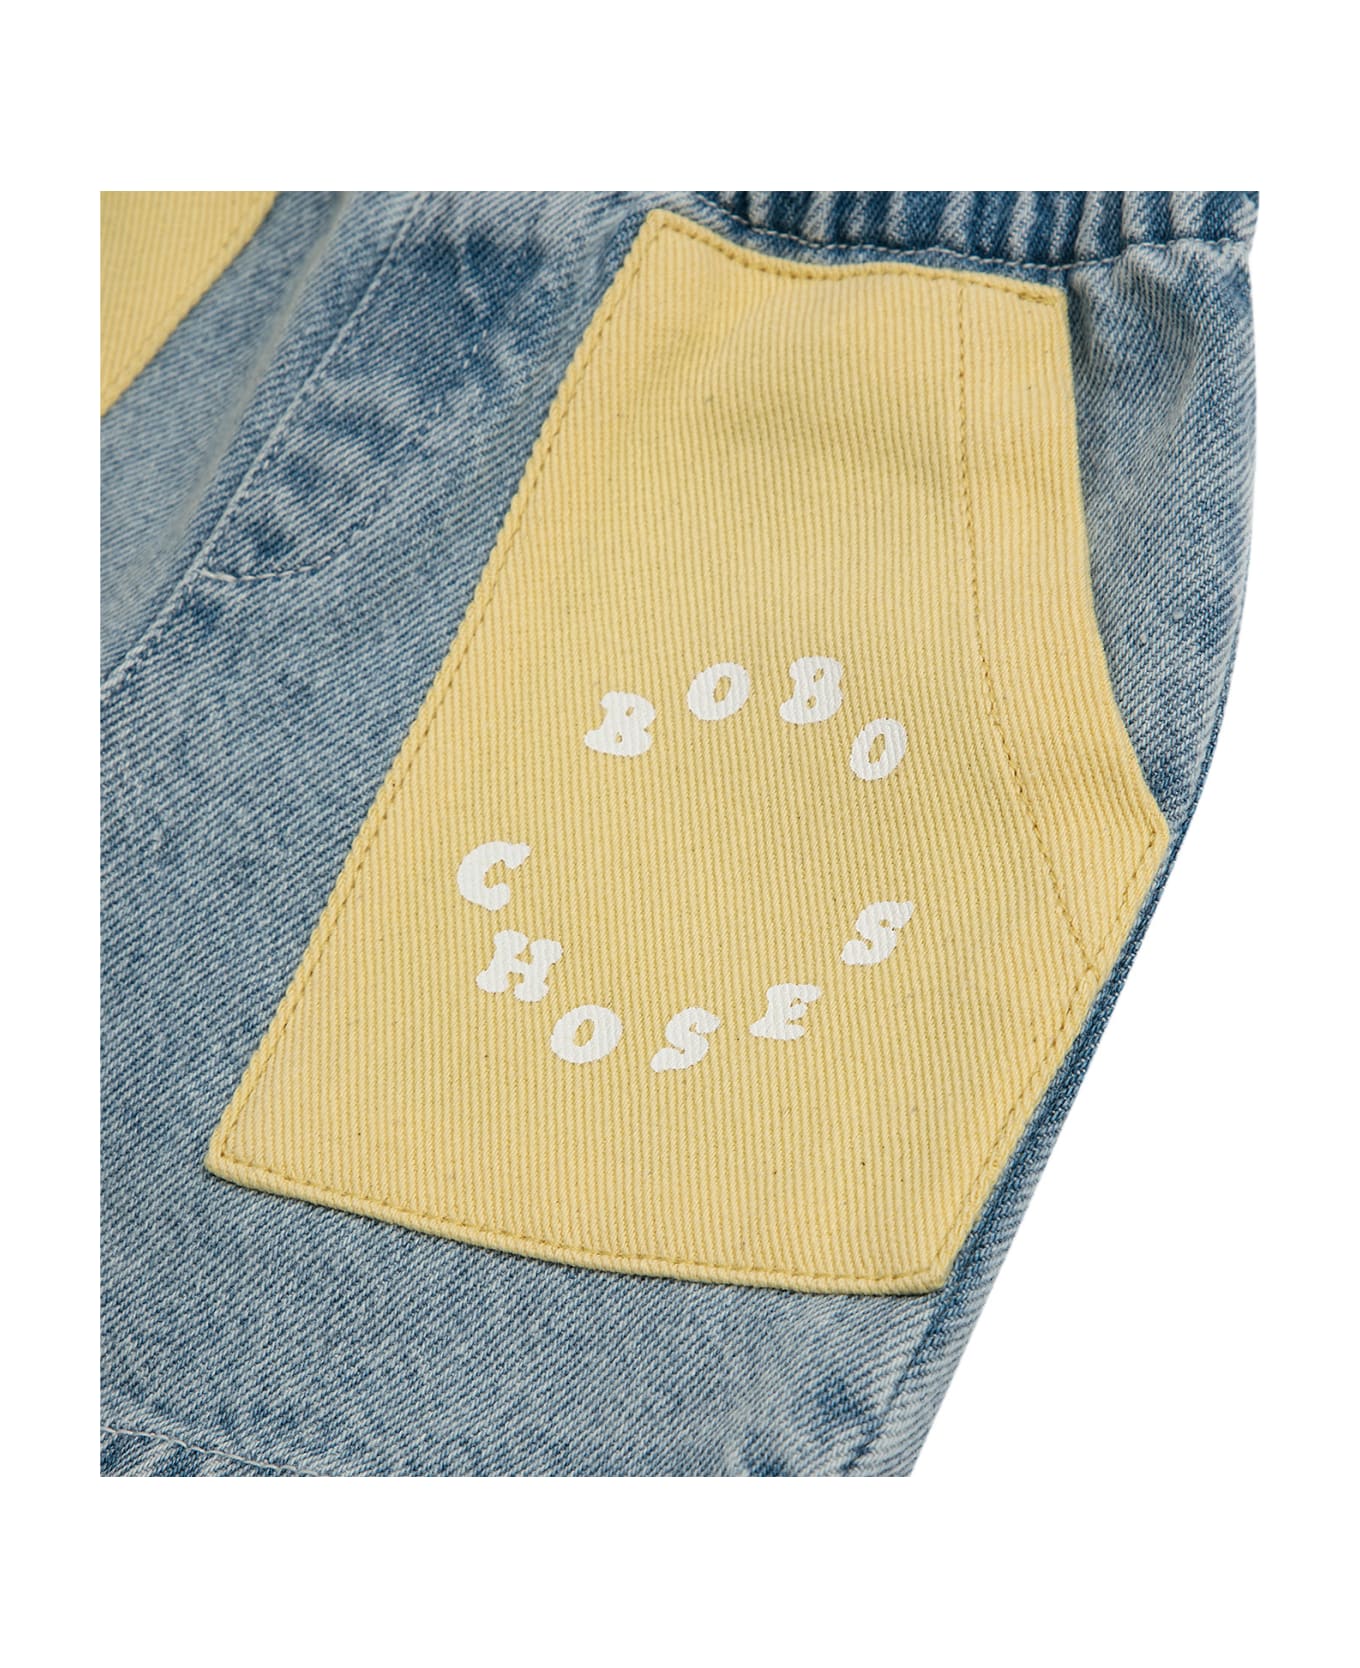 Bobo Choses Denim Shorts For Baby Boy With Yellow Pockets And Logo - Denim ボトムス